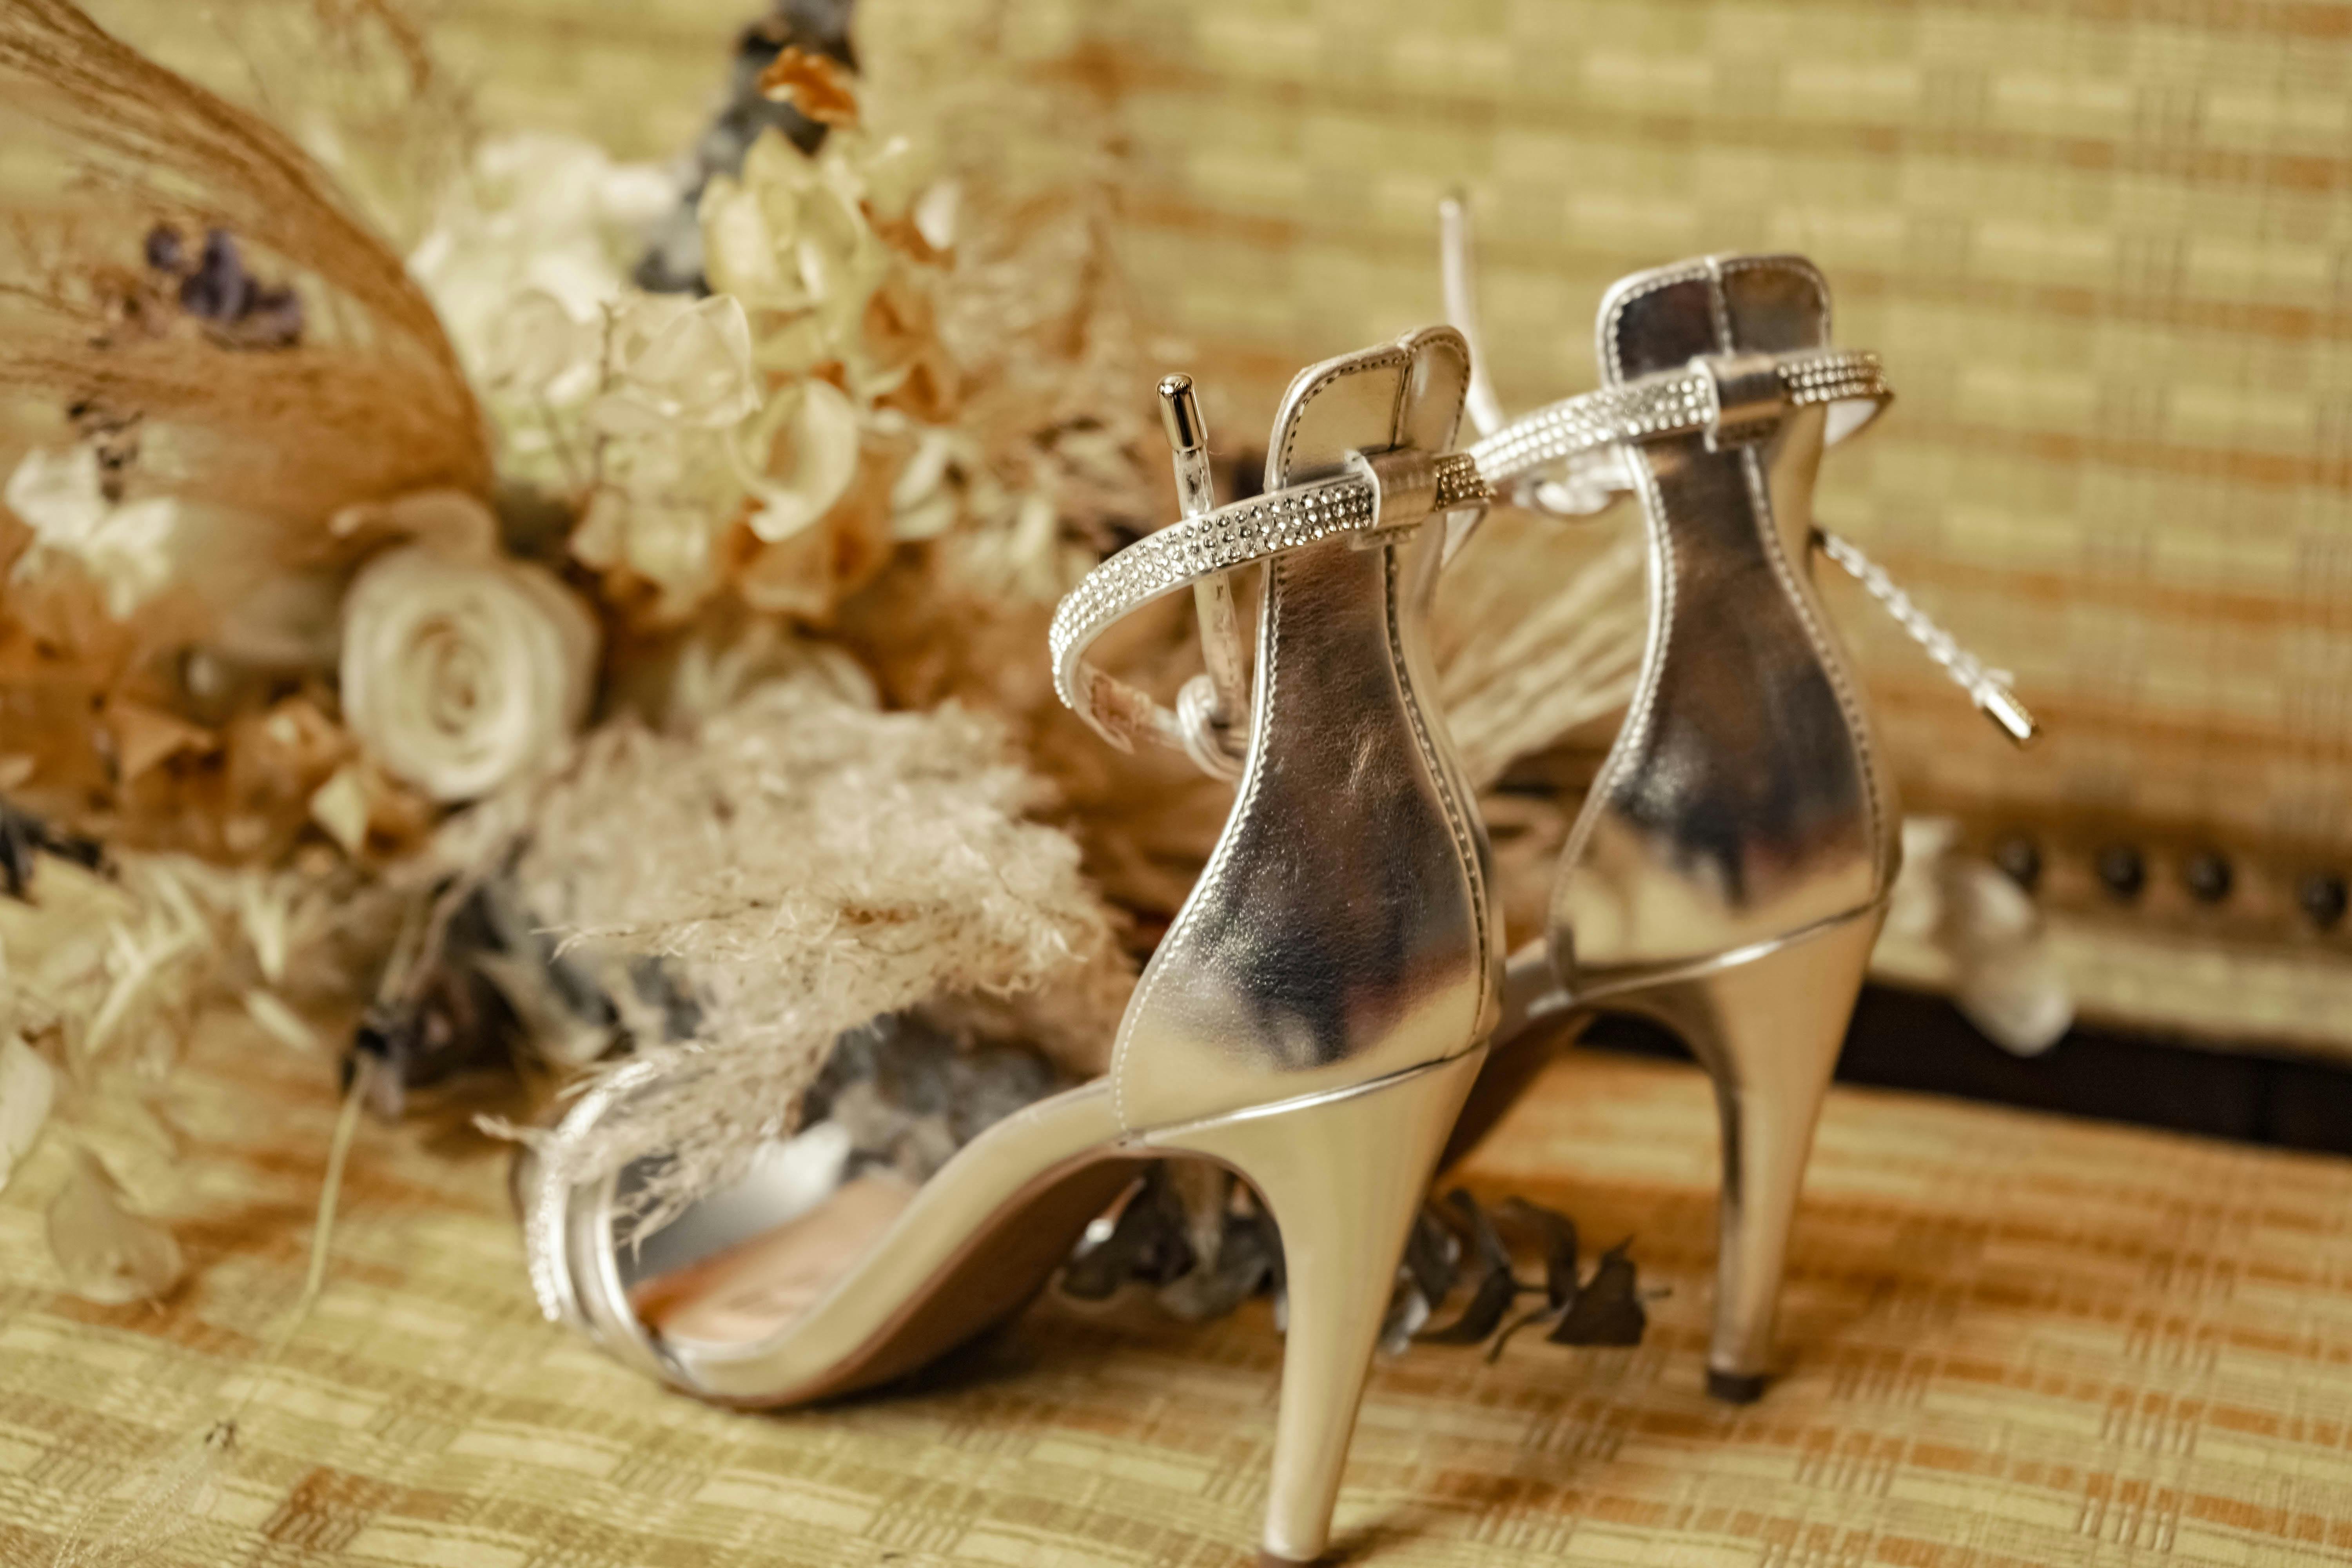 Gold high heel women's shoes price - Arad Branding